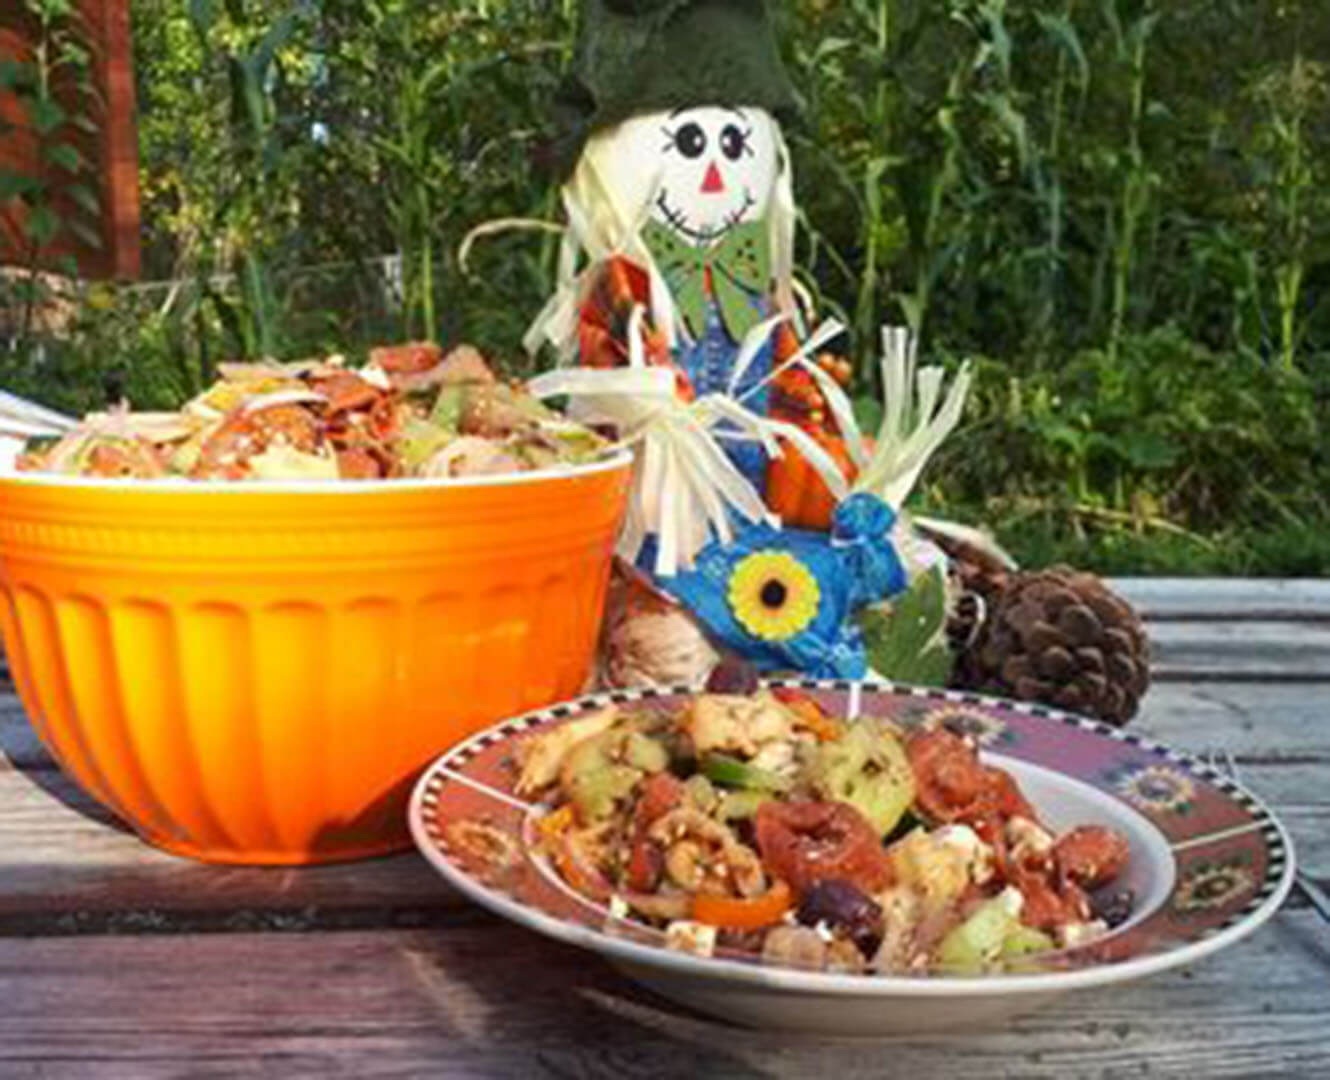 Pasta salad and thanksgiving decorations